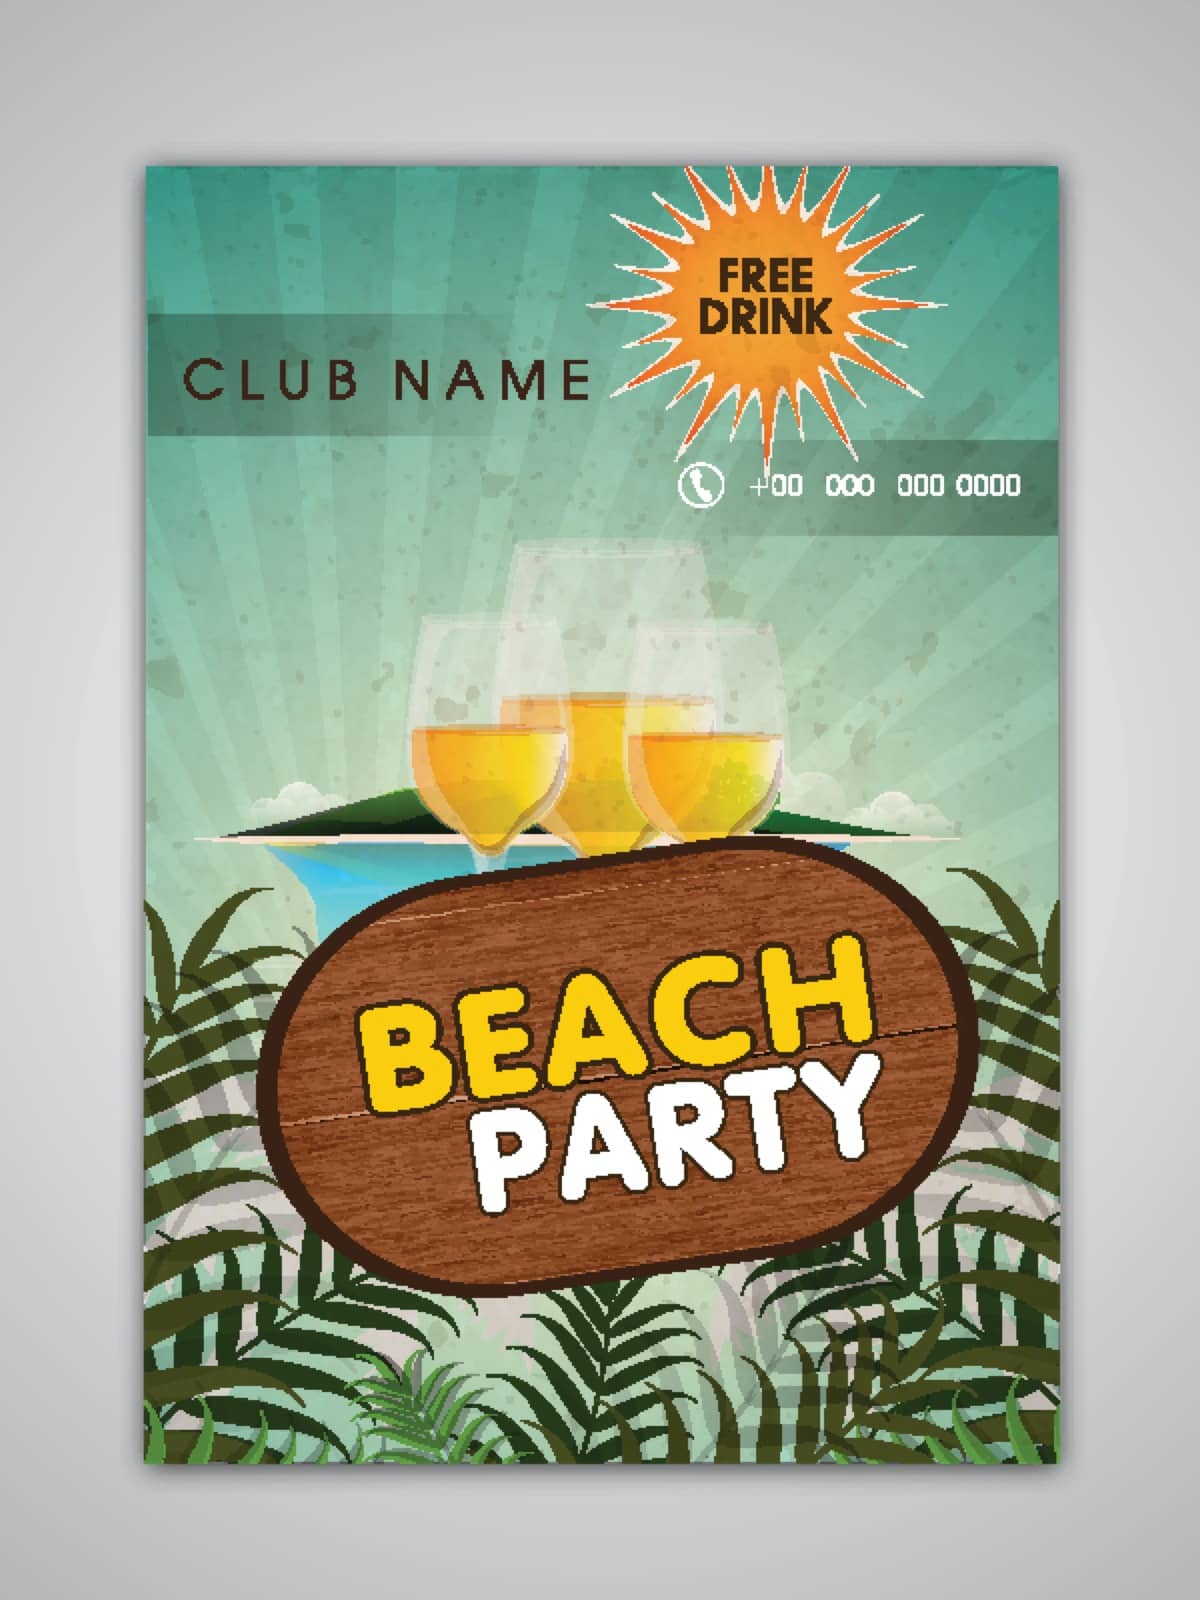 Vintage Template, Banner, Flyer or Invitation design for Beach Party celebration.